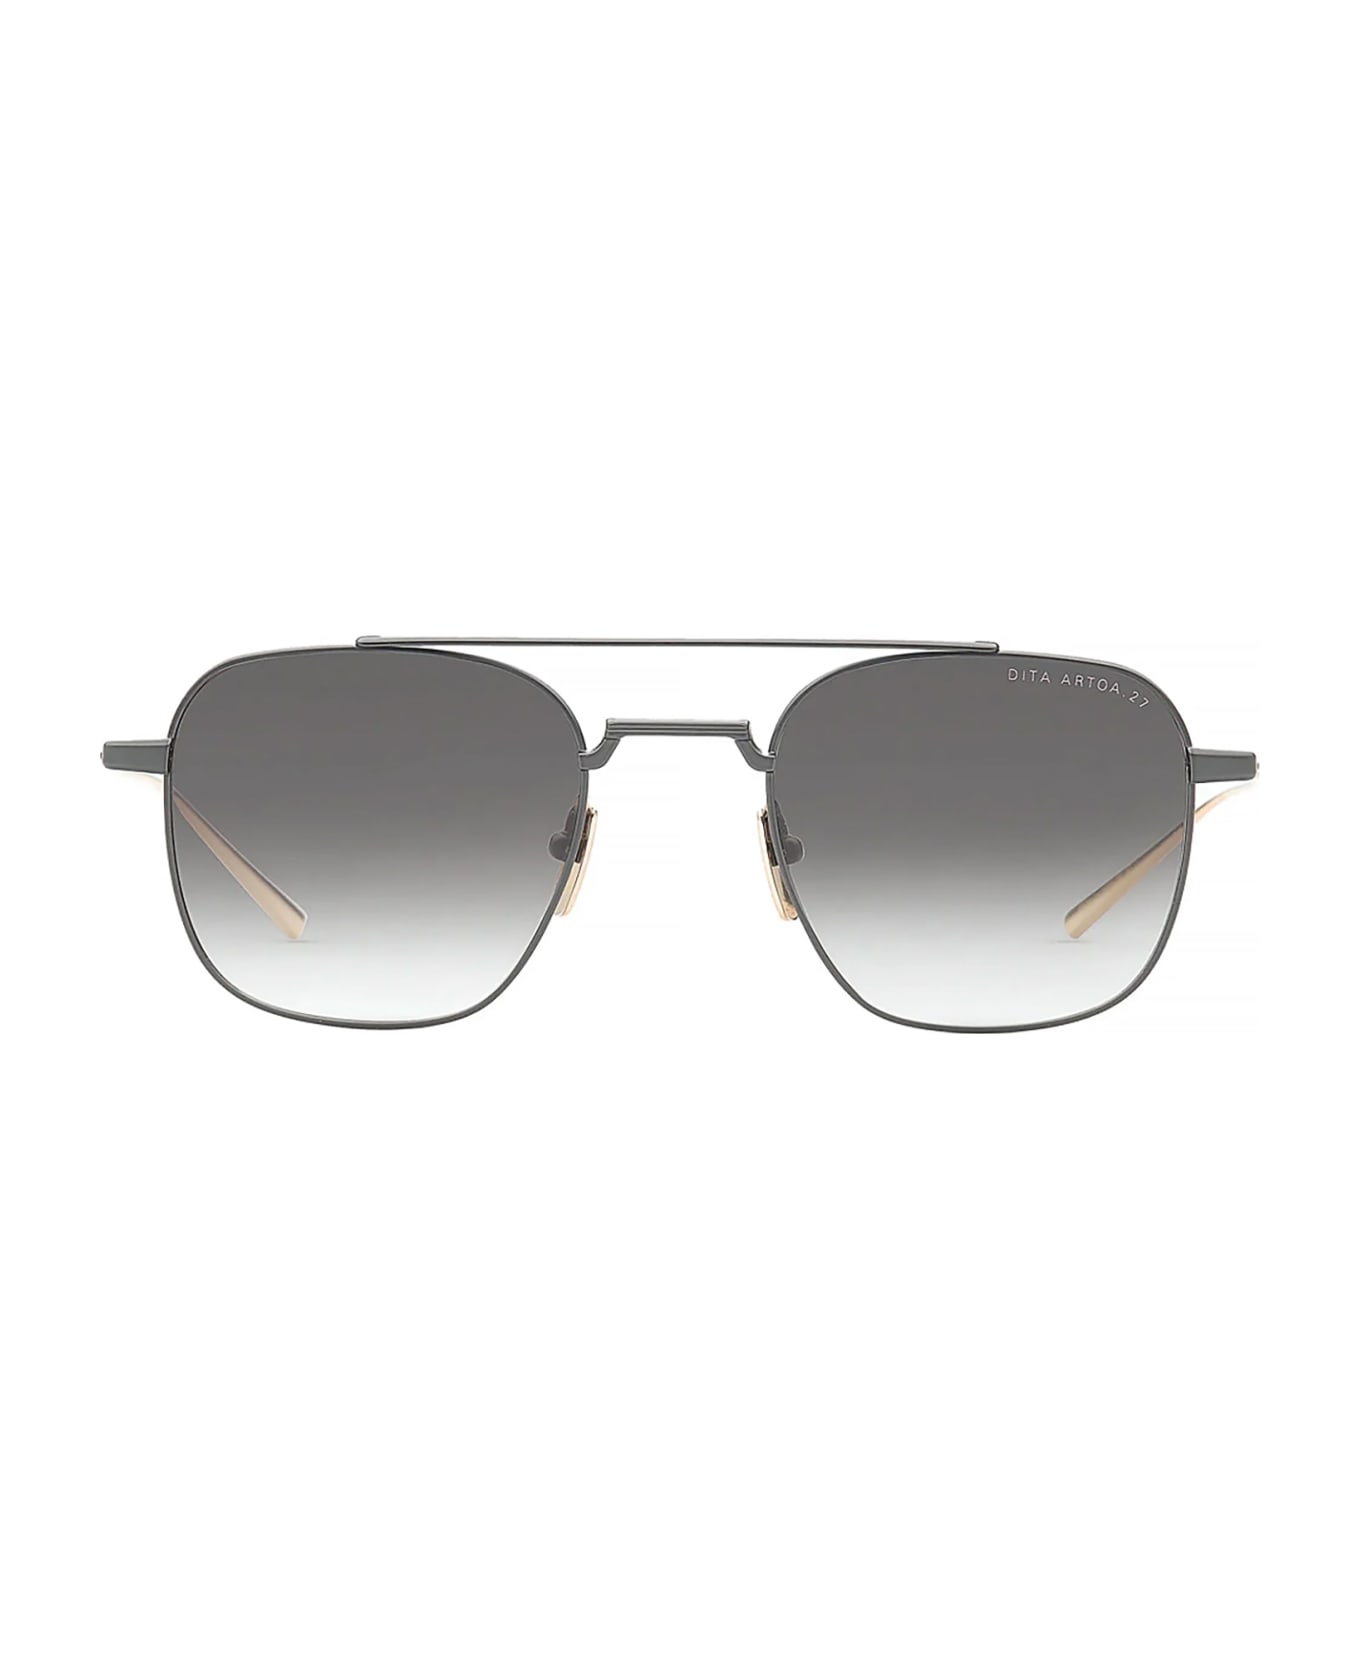 Dita DTS163/A/02 ARTOA.27 Sunglasses - Black Iron_white Gold サングラス